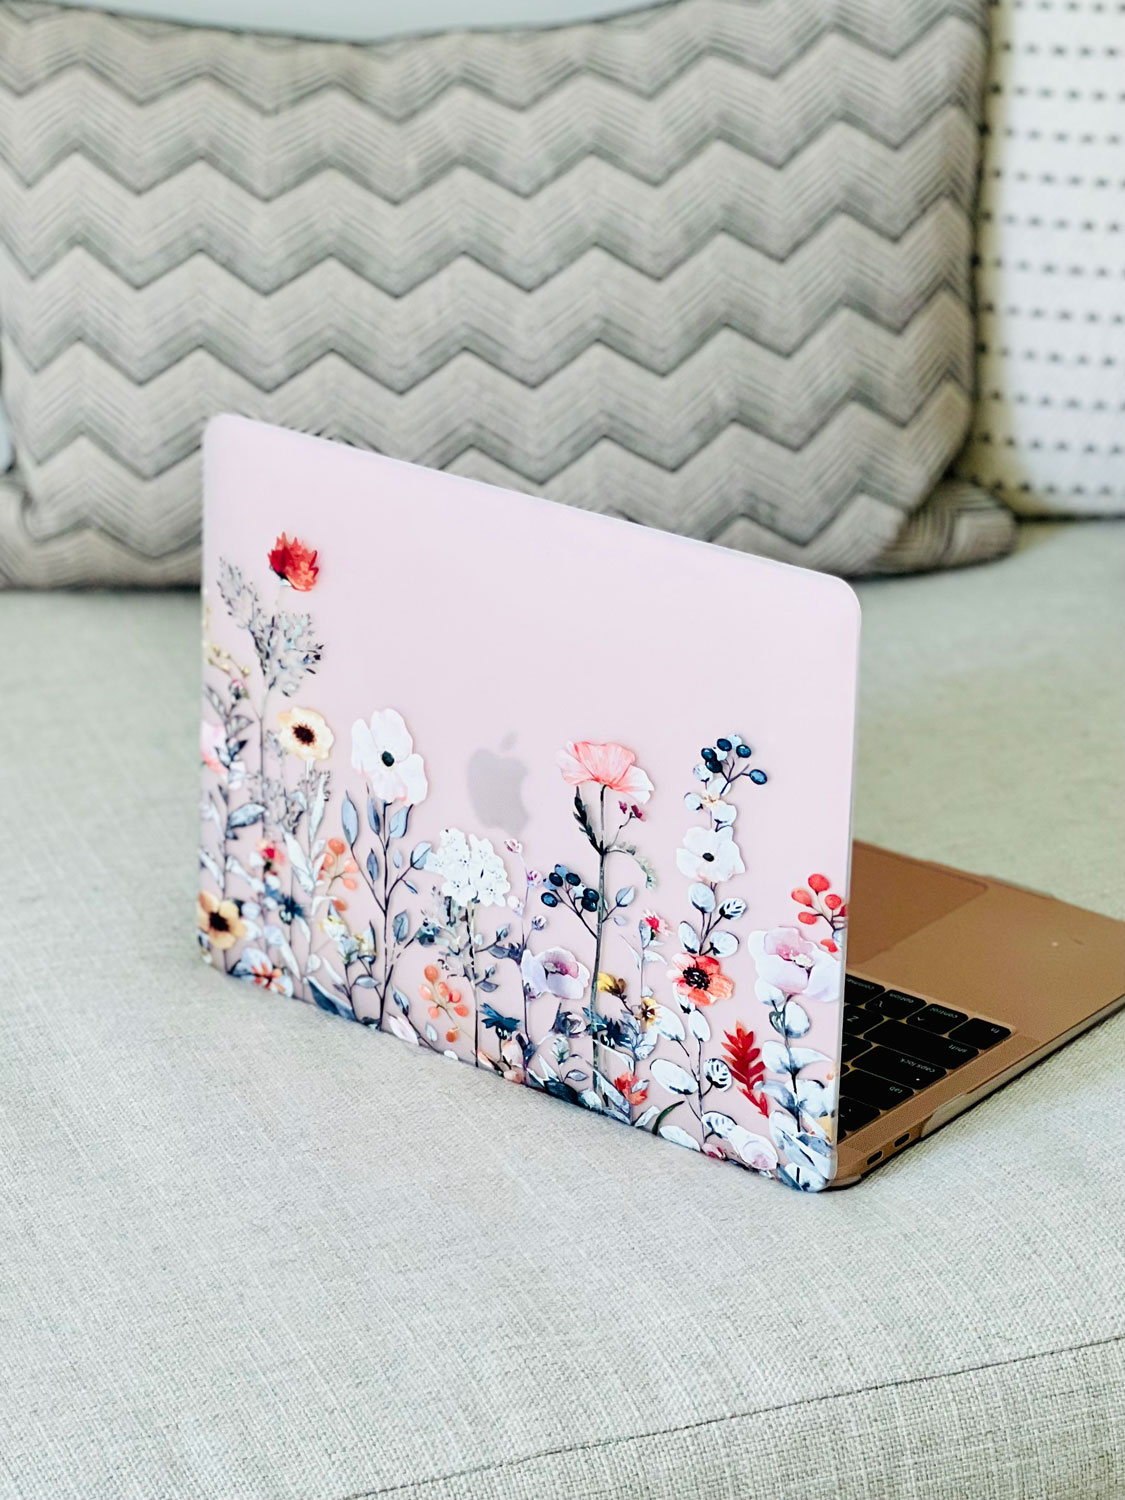 Flowered laptop case